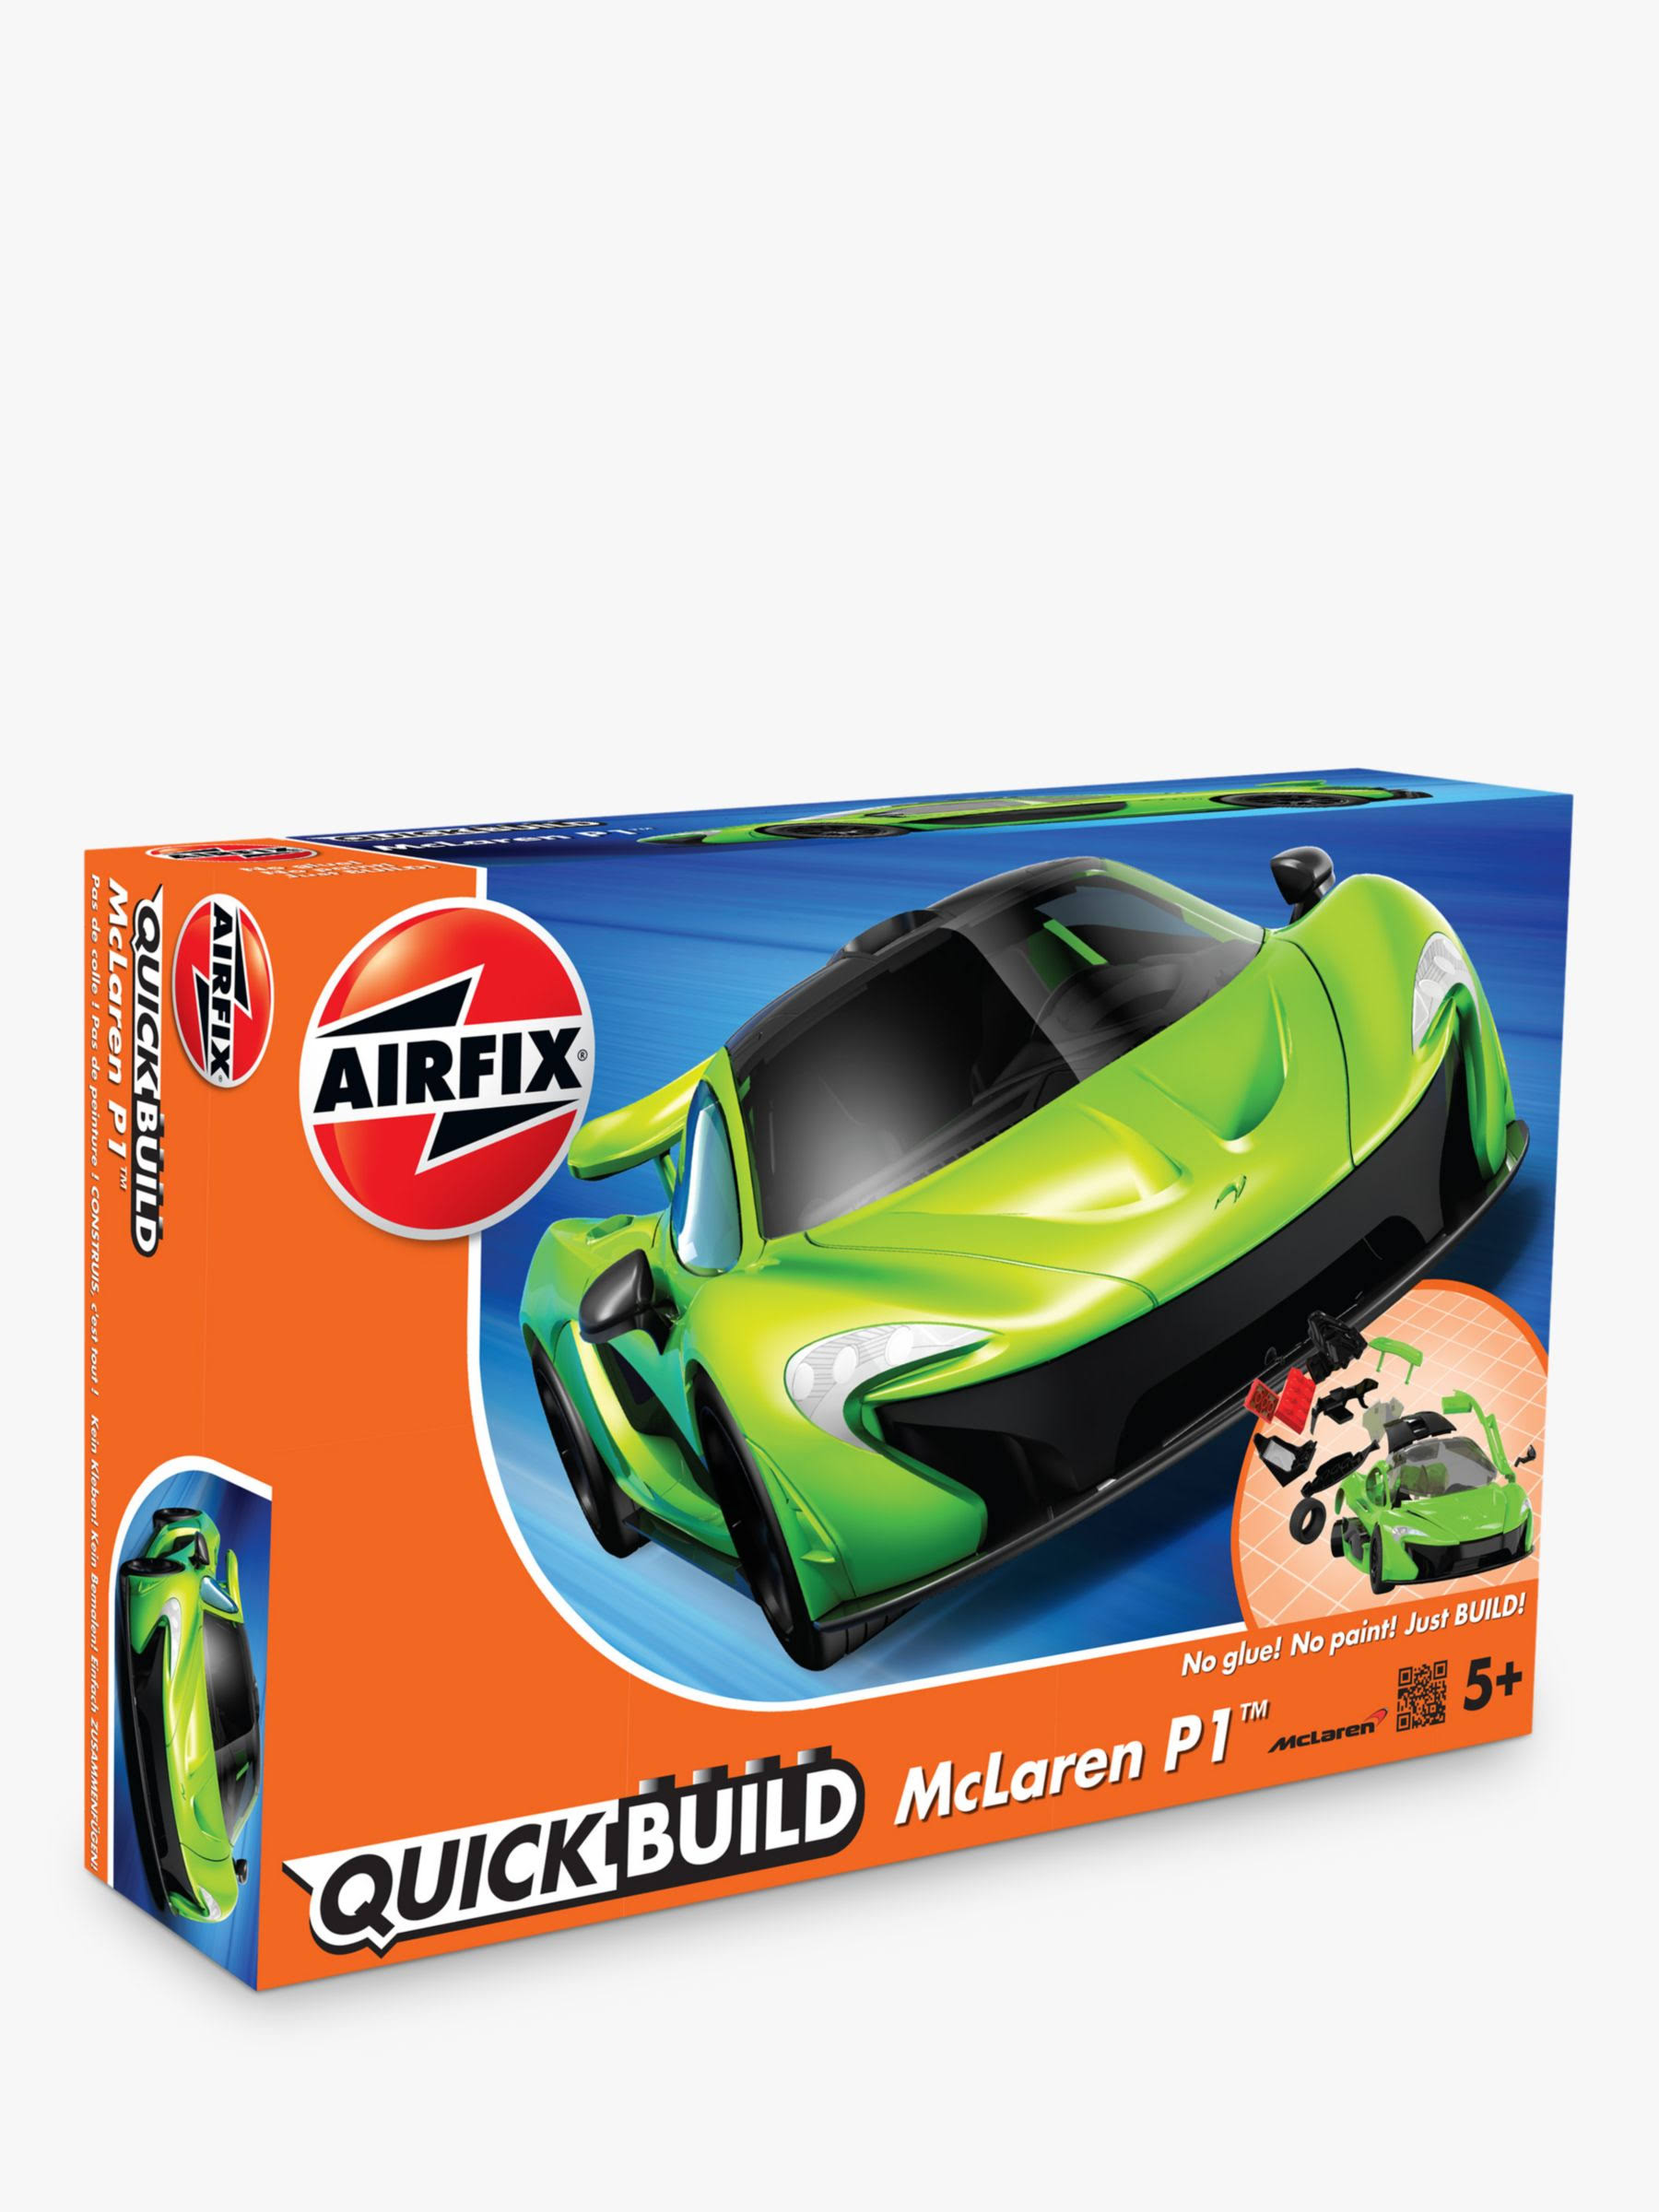 Airfix J6021 Quickbuild McLaren P1 Green